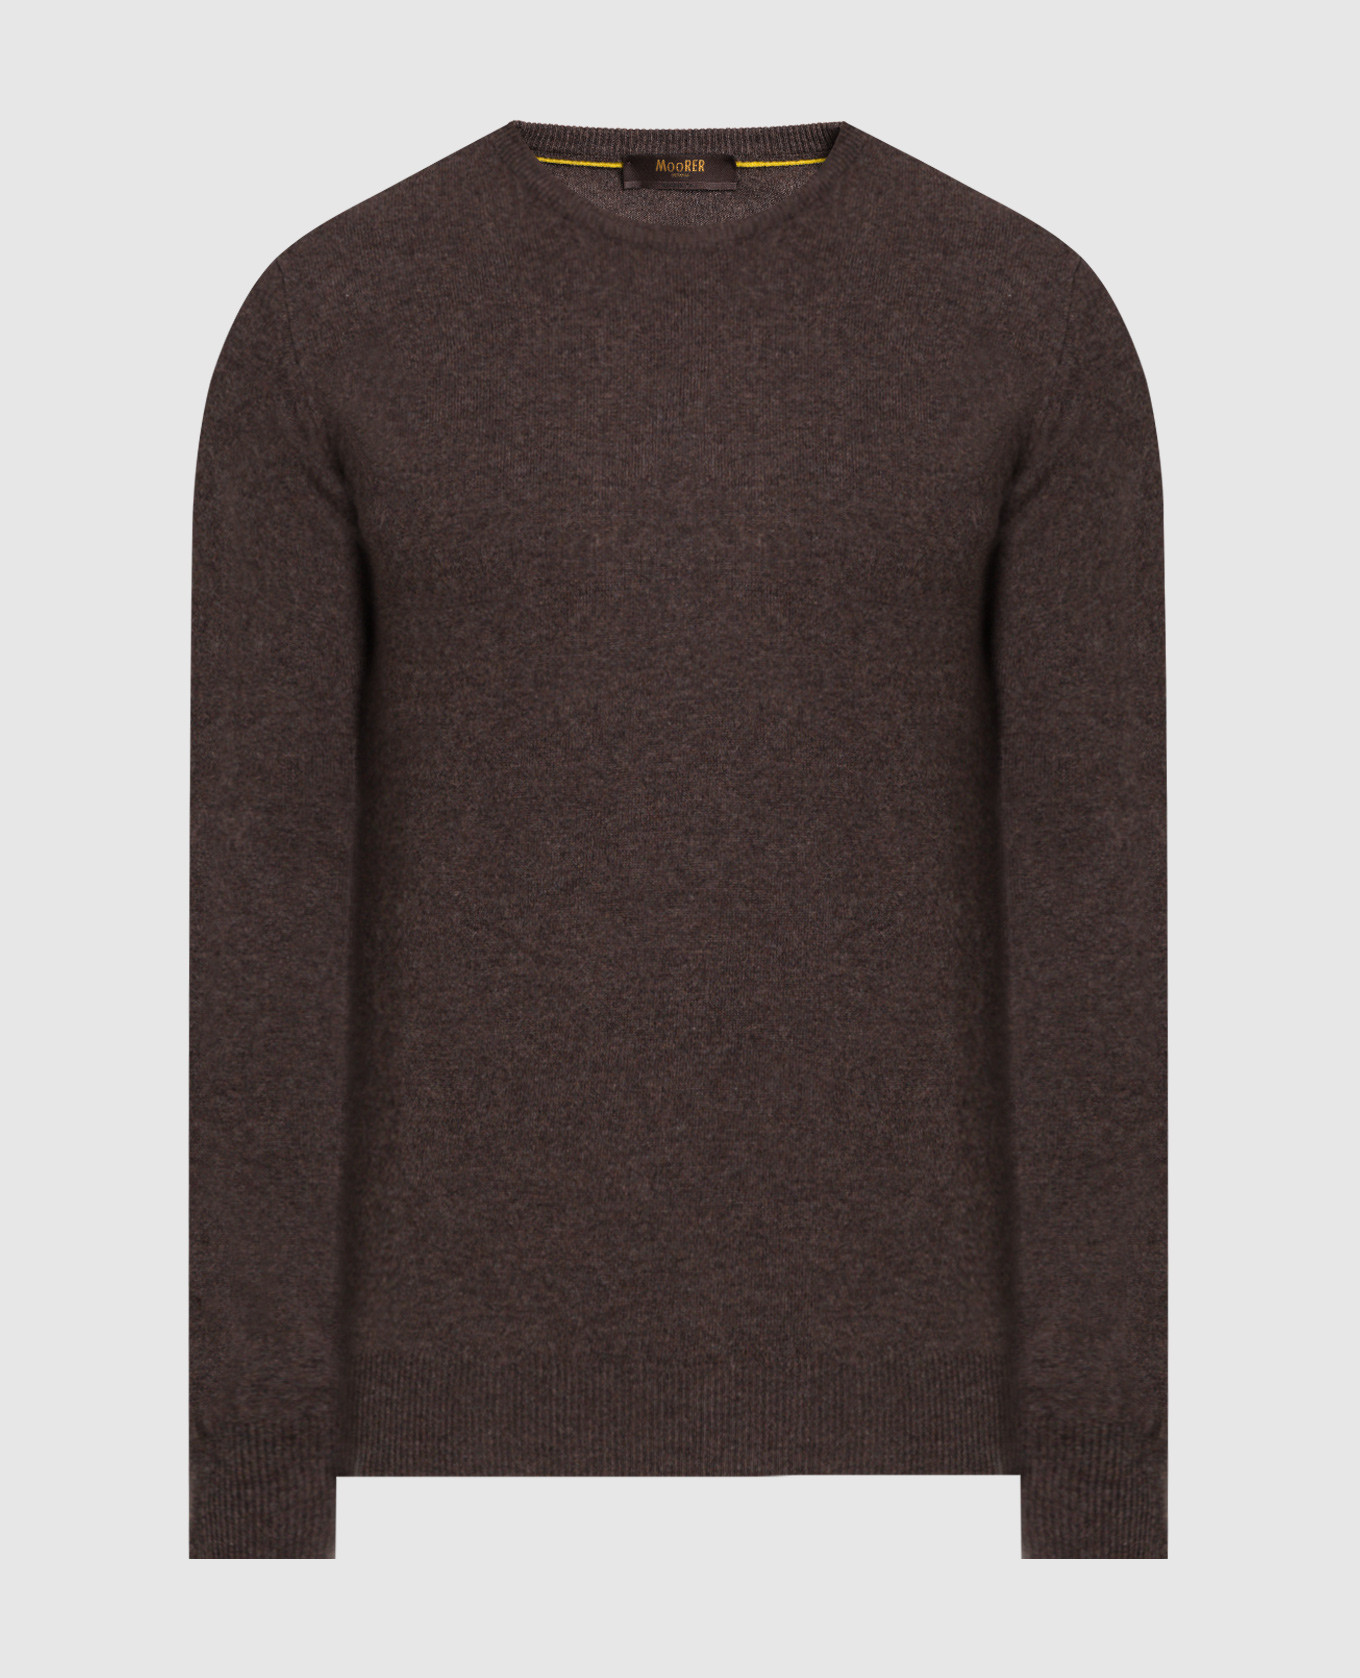 Orvieto brown cashmere jumper